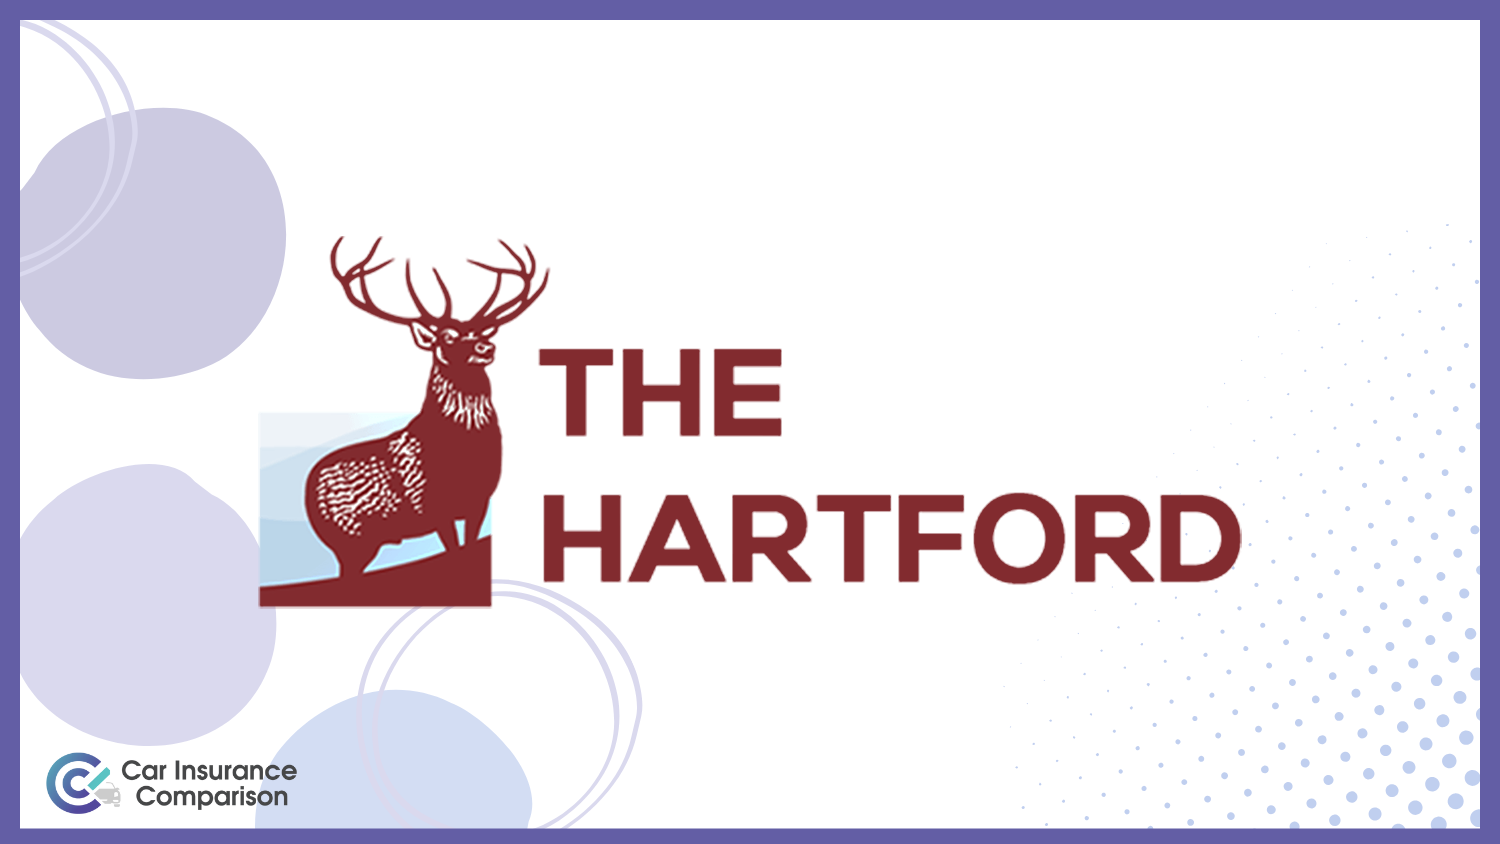 The Hartford: Best International Car Insurance